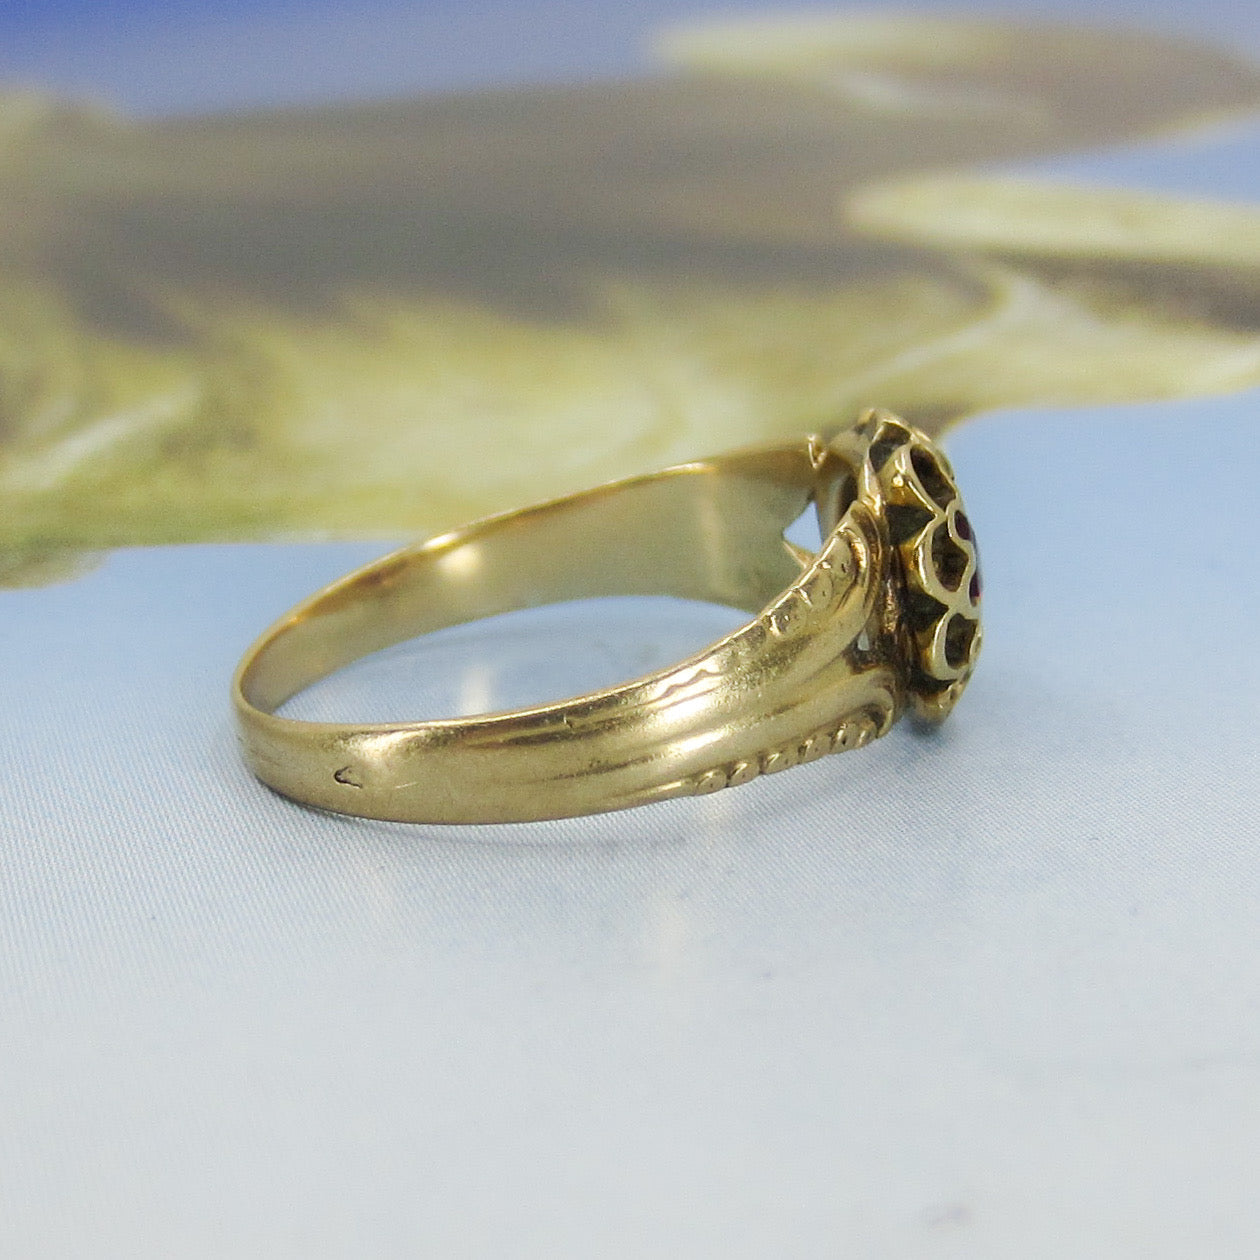 SOLD-Victorian Garnet Ring 14k c. 1880